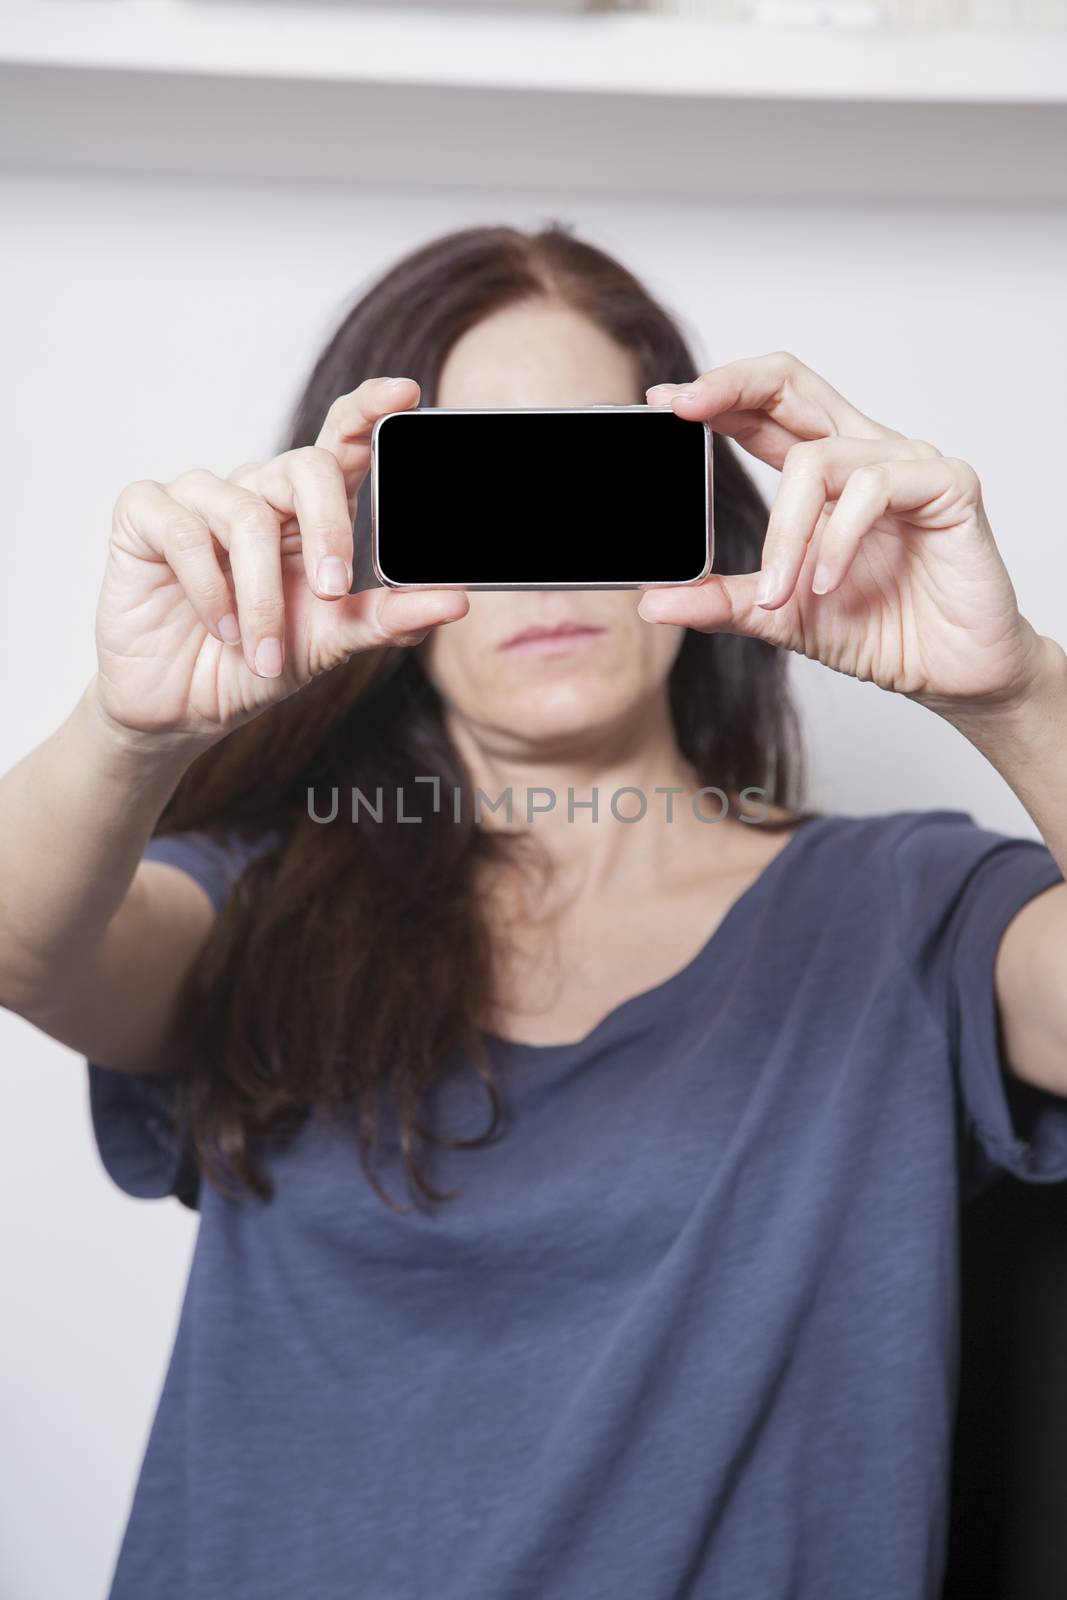 blank black screen smartphone close on blue shirt woman hands